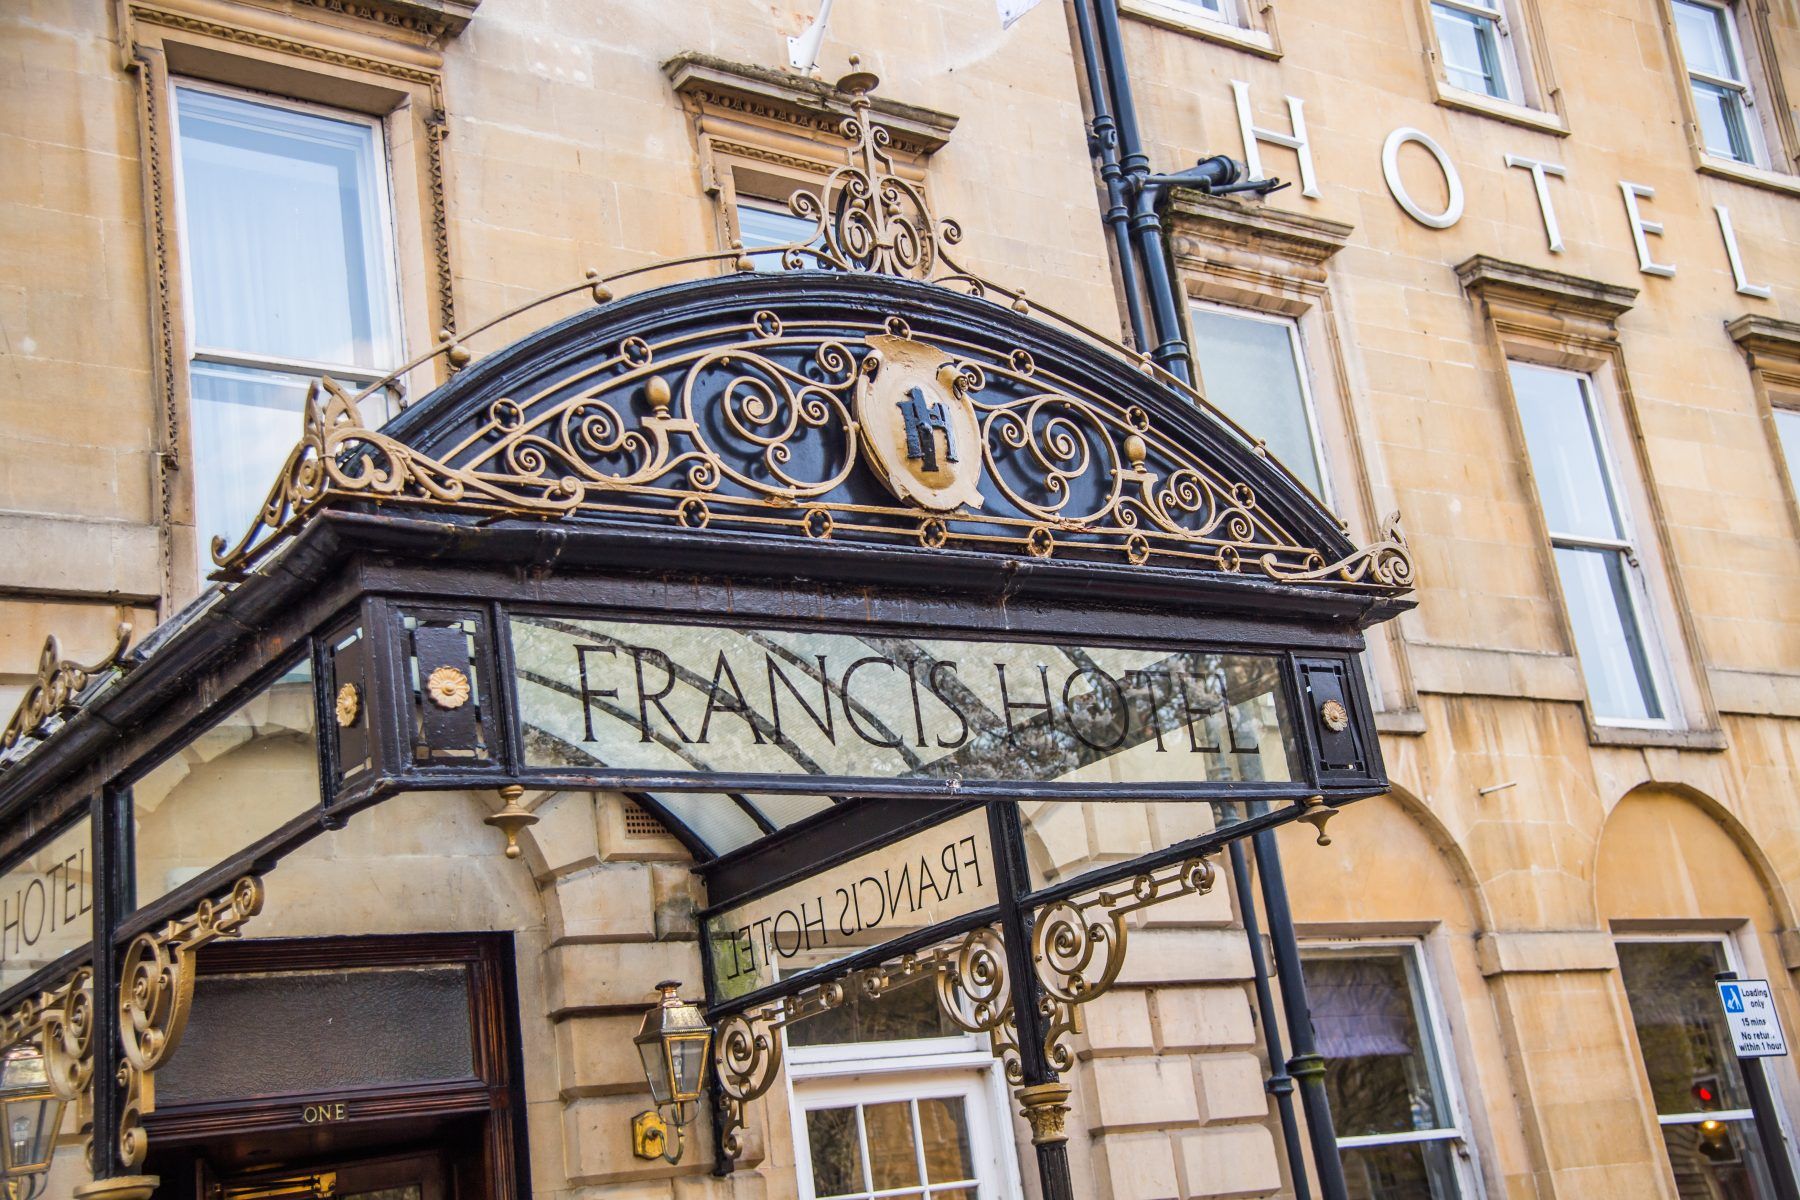 Francis Hotel entrance